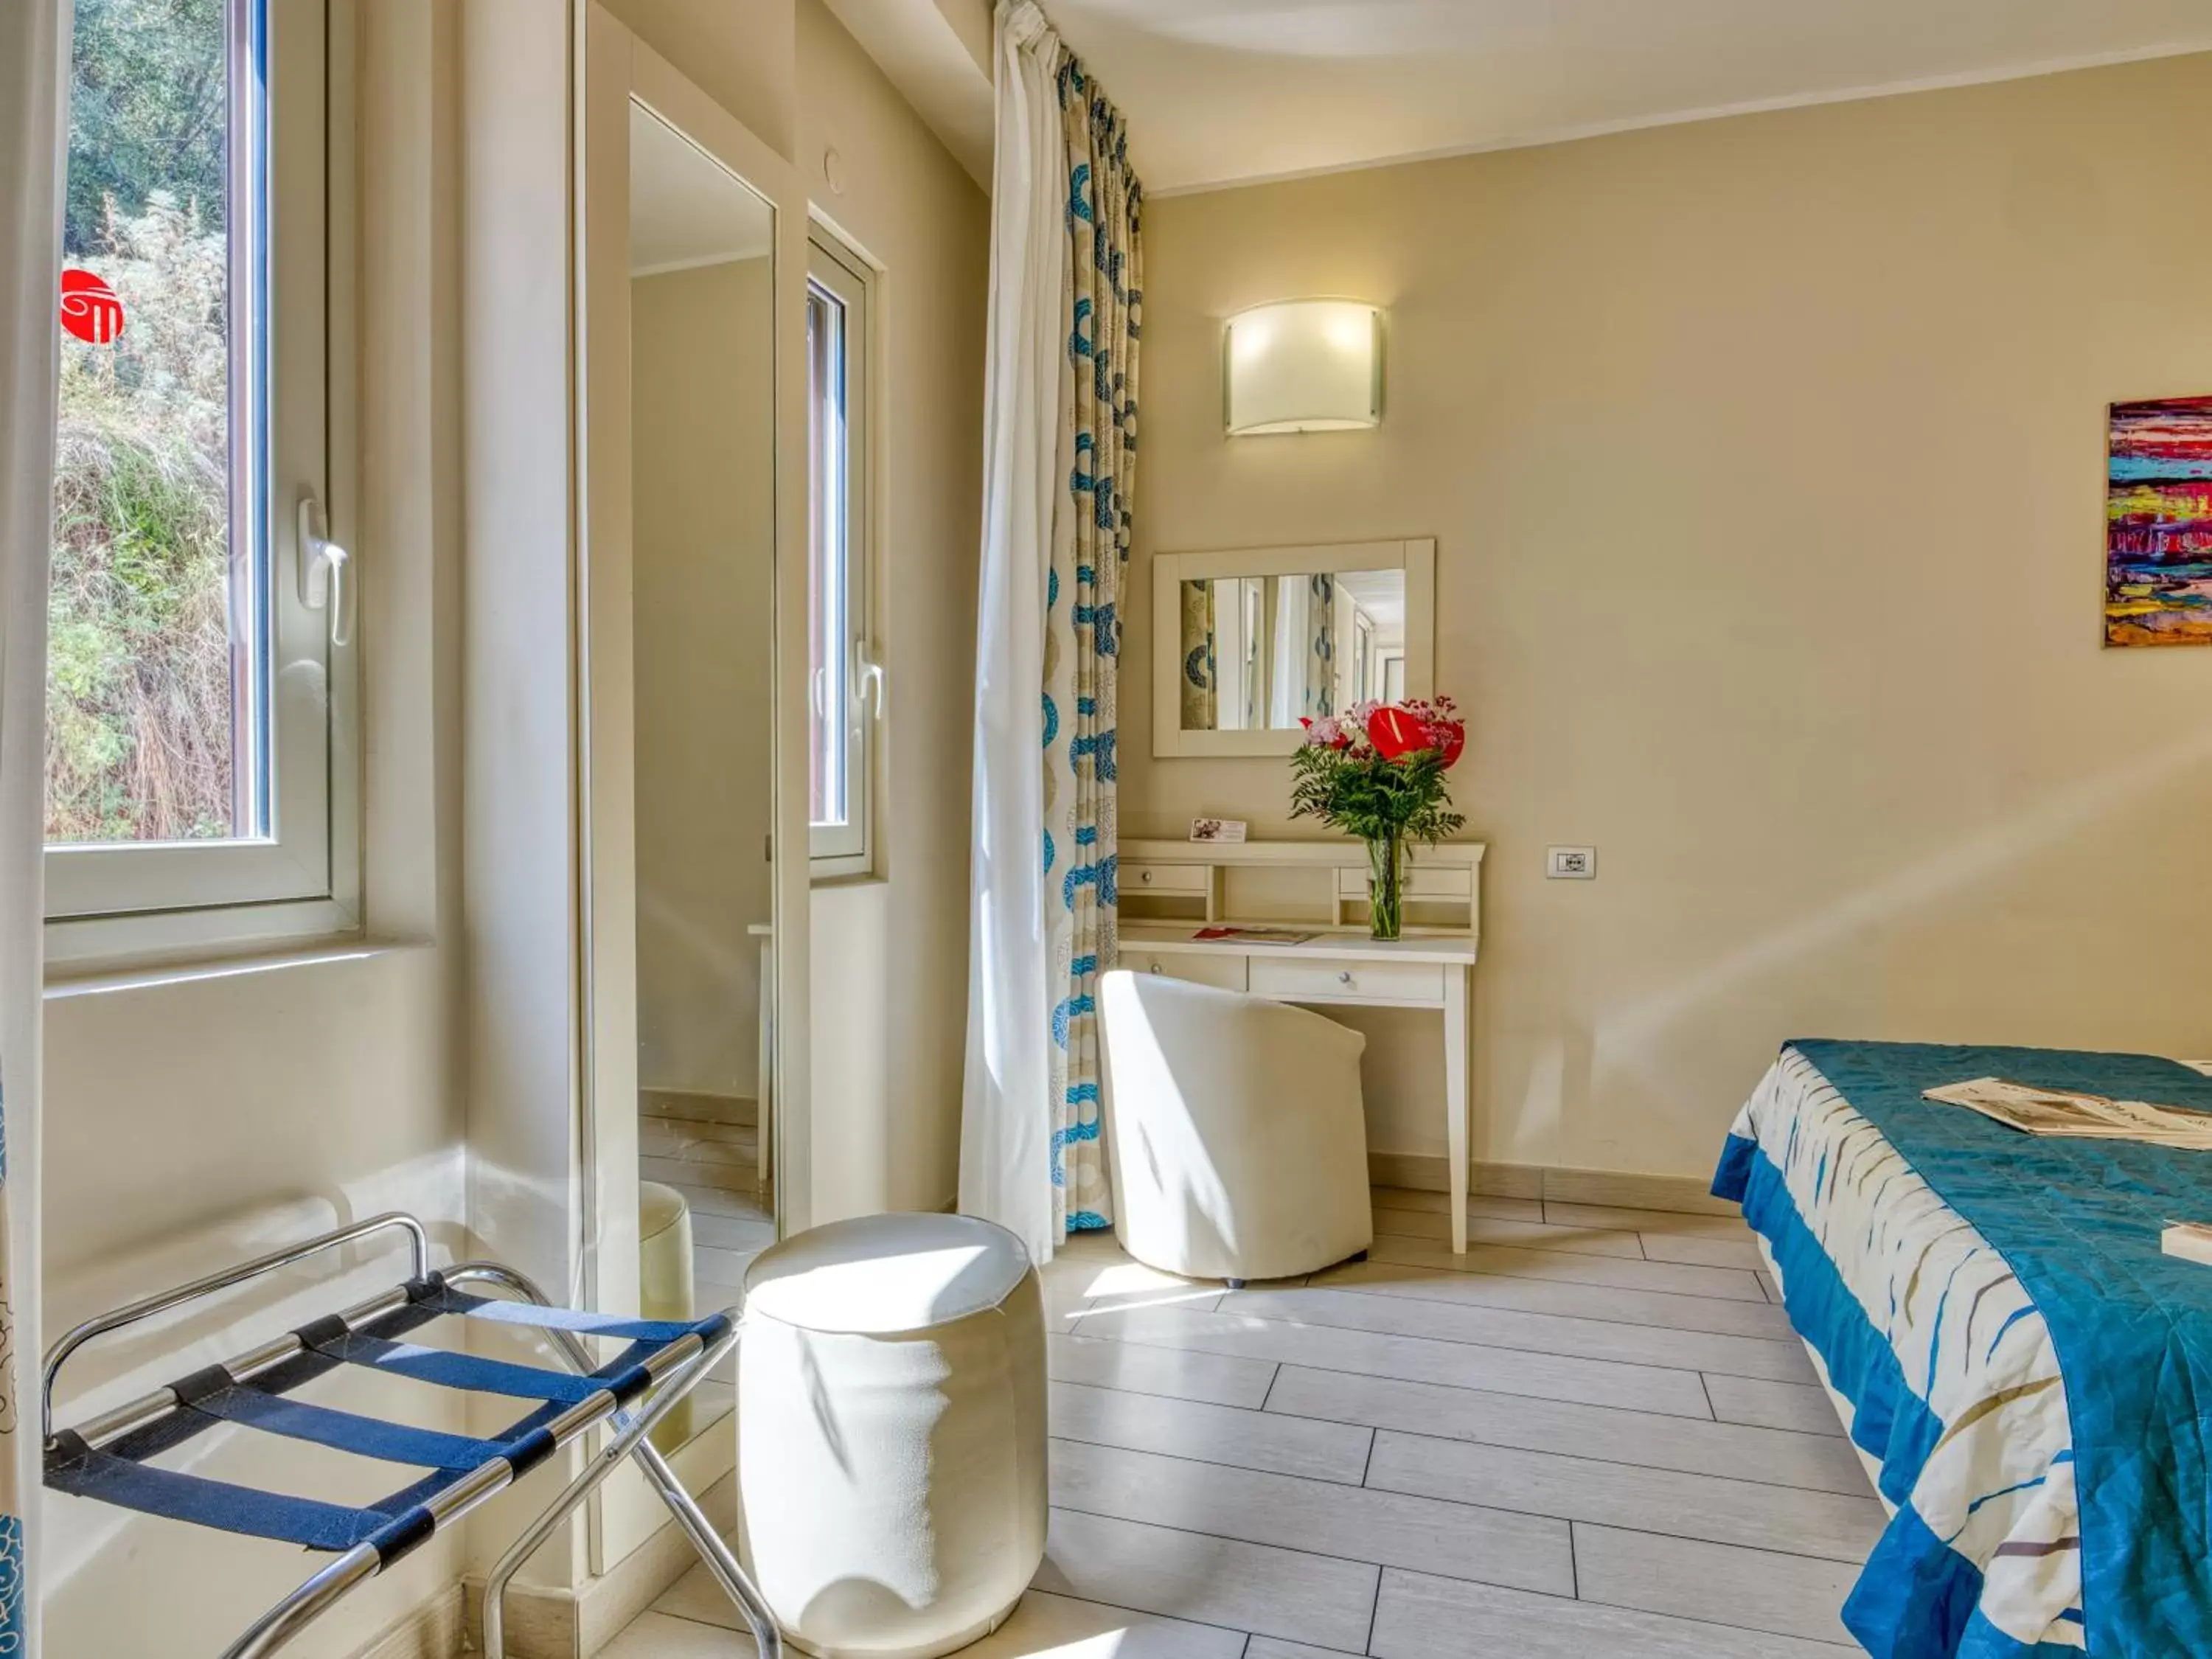 Bedroom, Bathroom in Hotel Ariston and Palazzo Santa Caterina